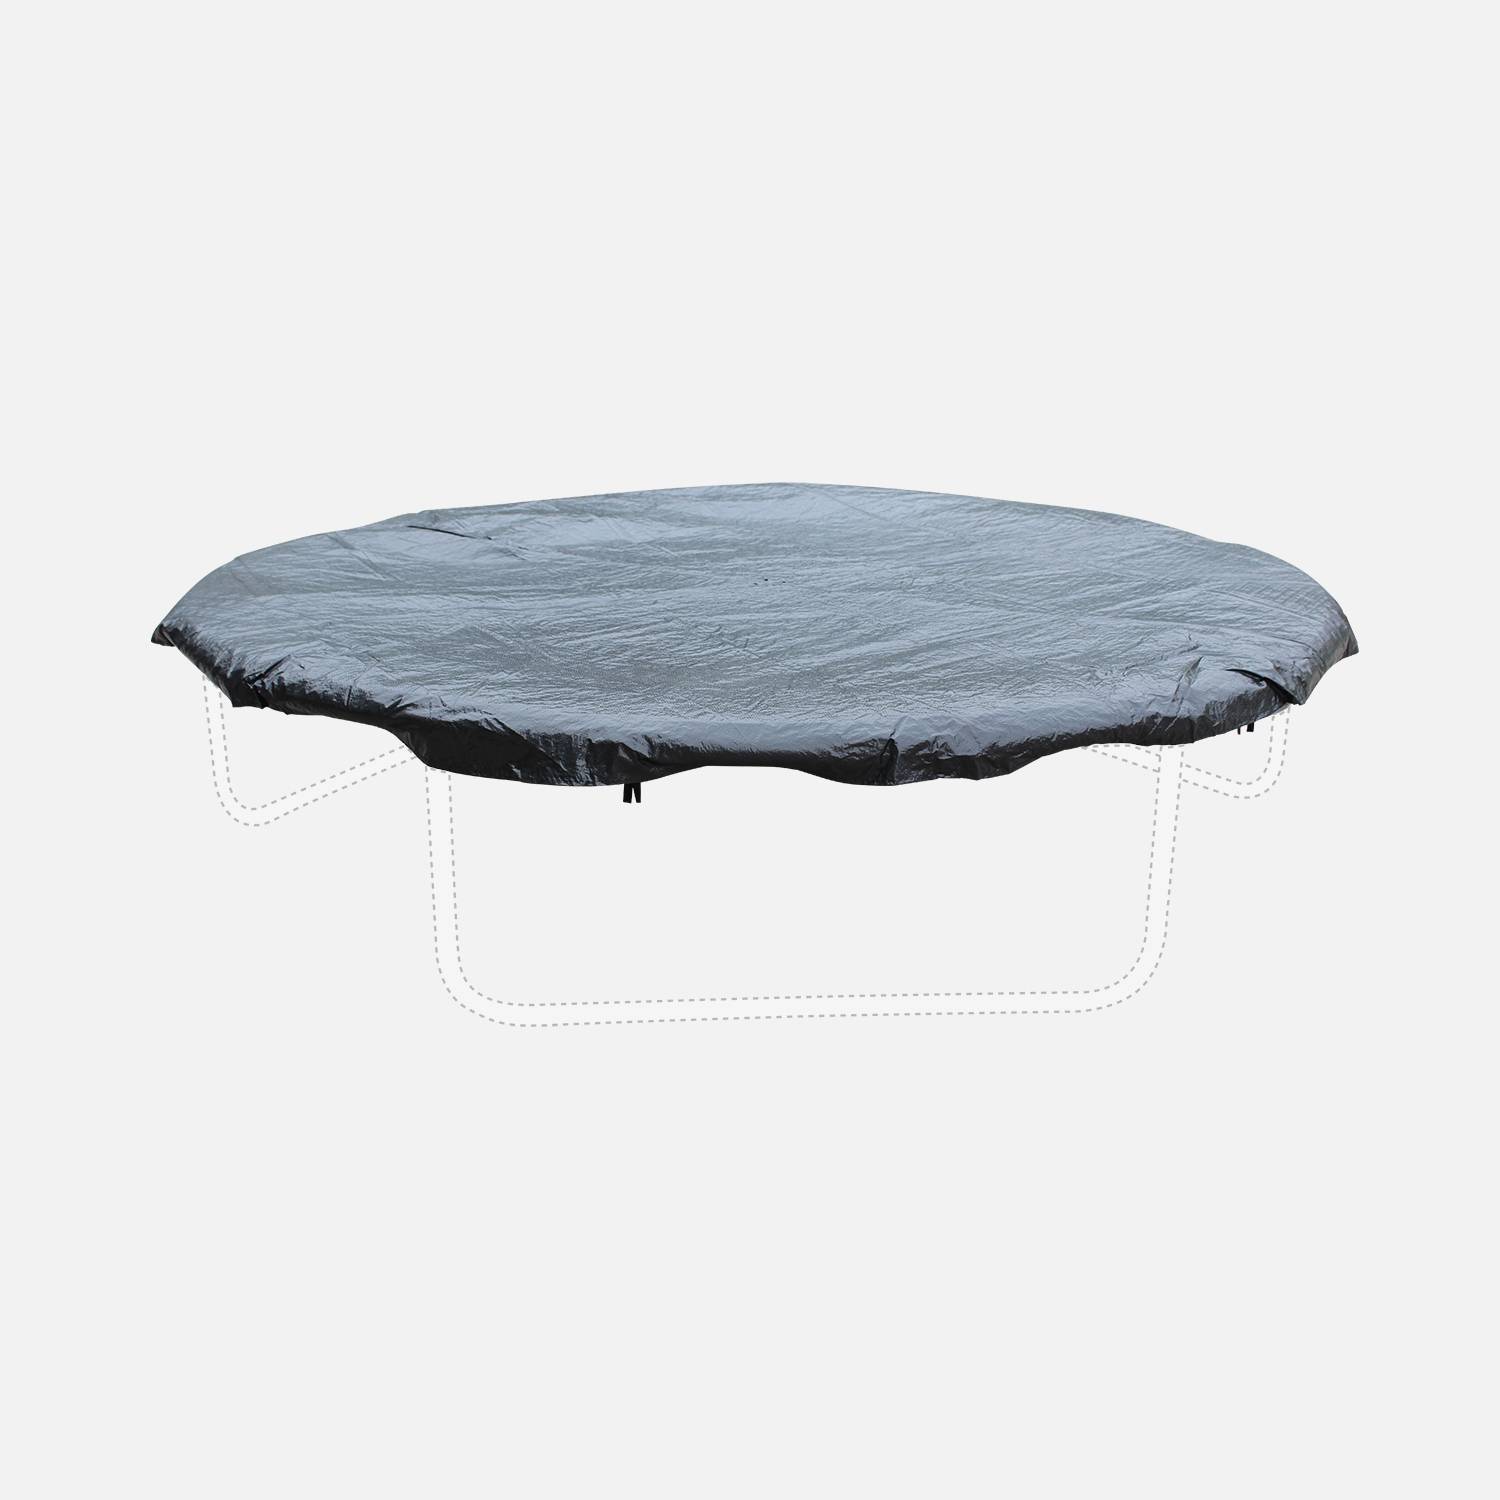 Fodera di protezione per trampolino 245/250CM - adattabile a tutti i marchi di trampolini Photo1